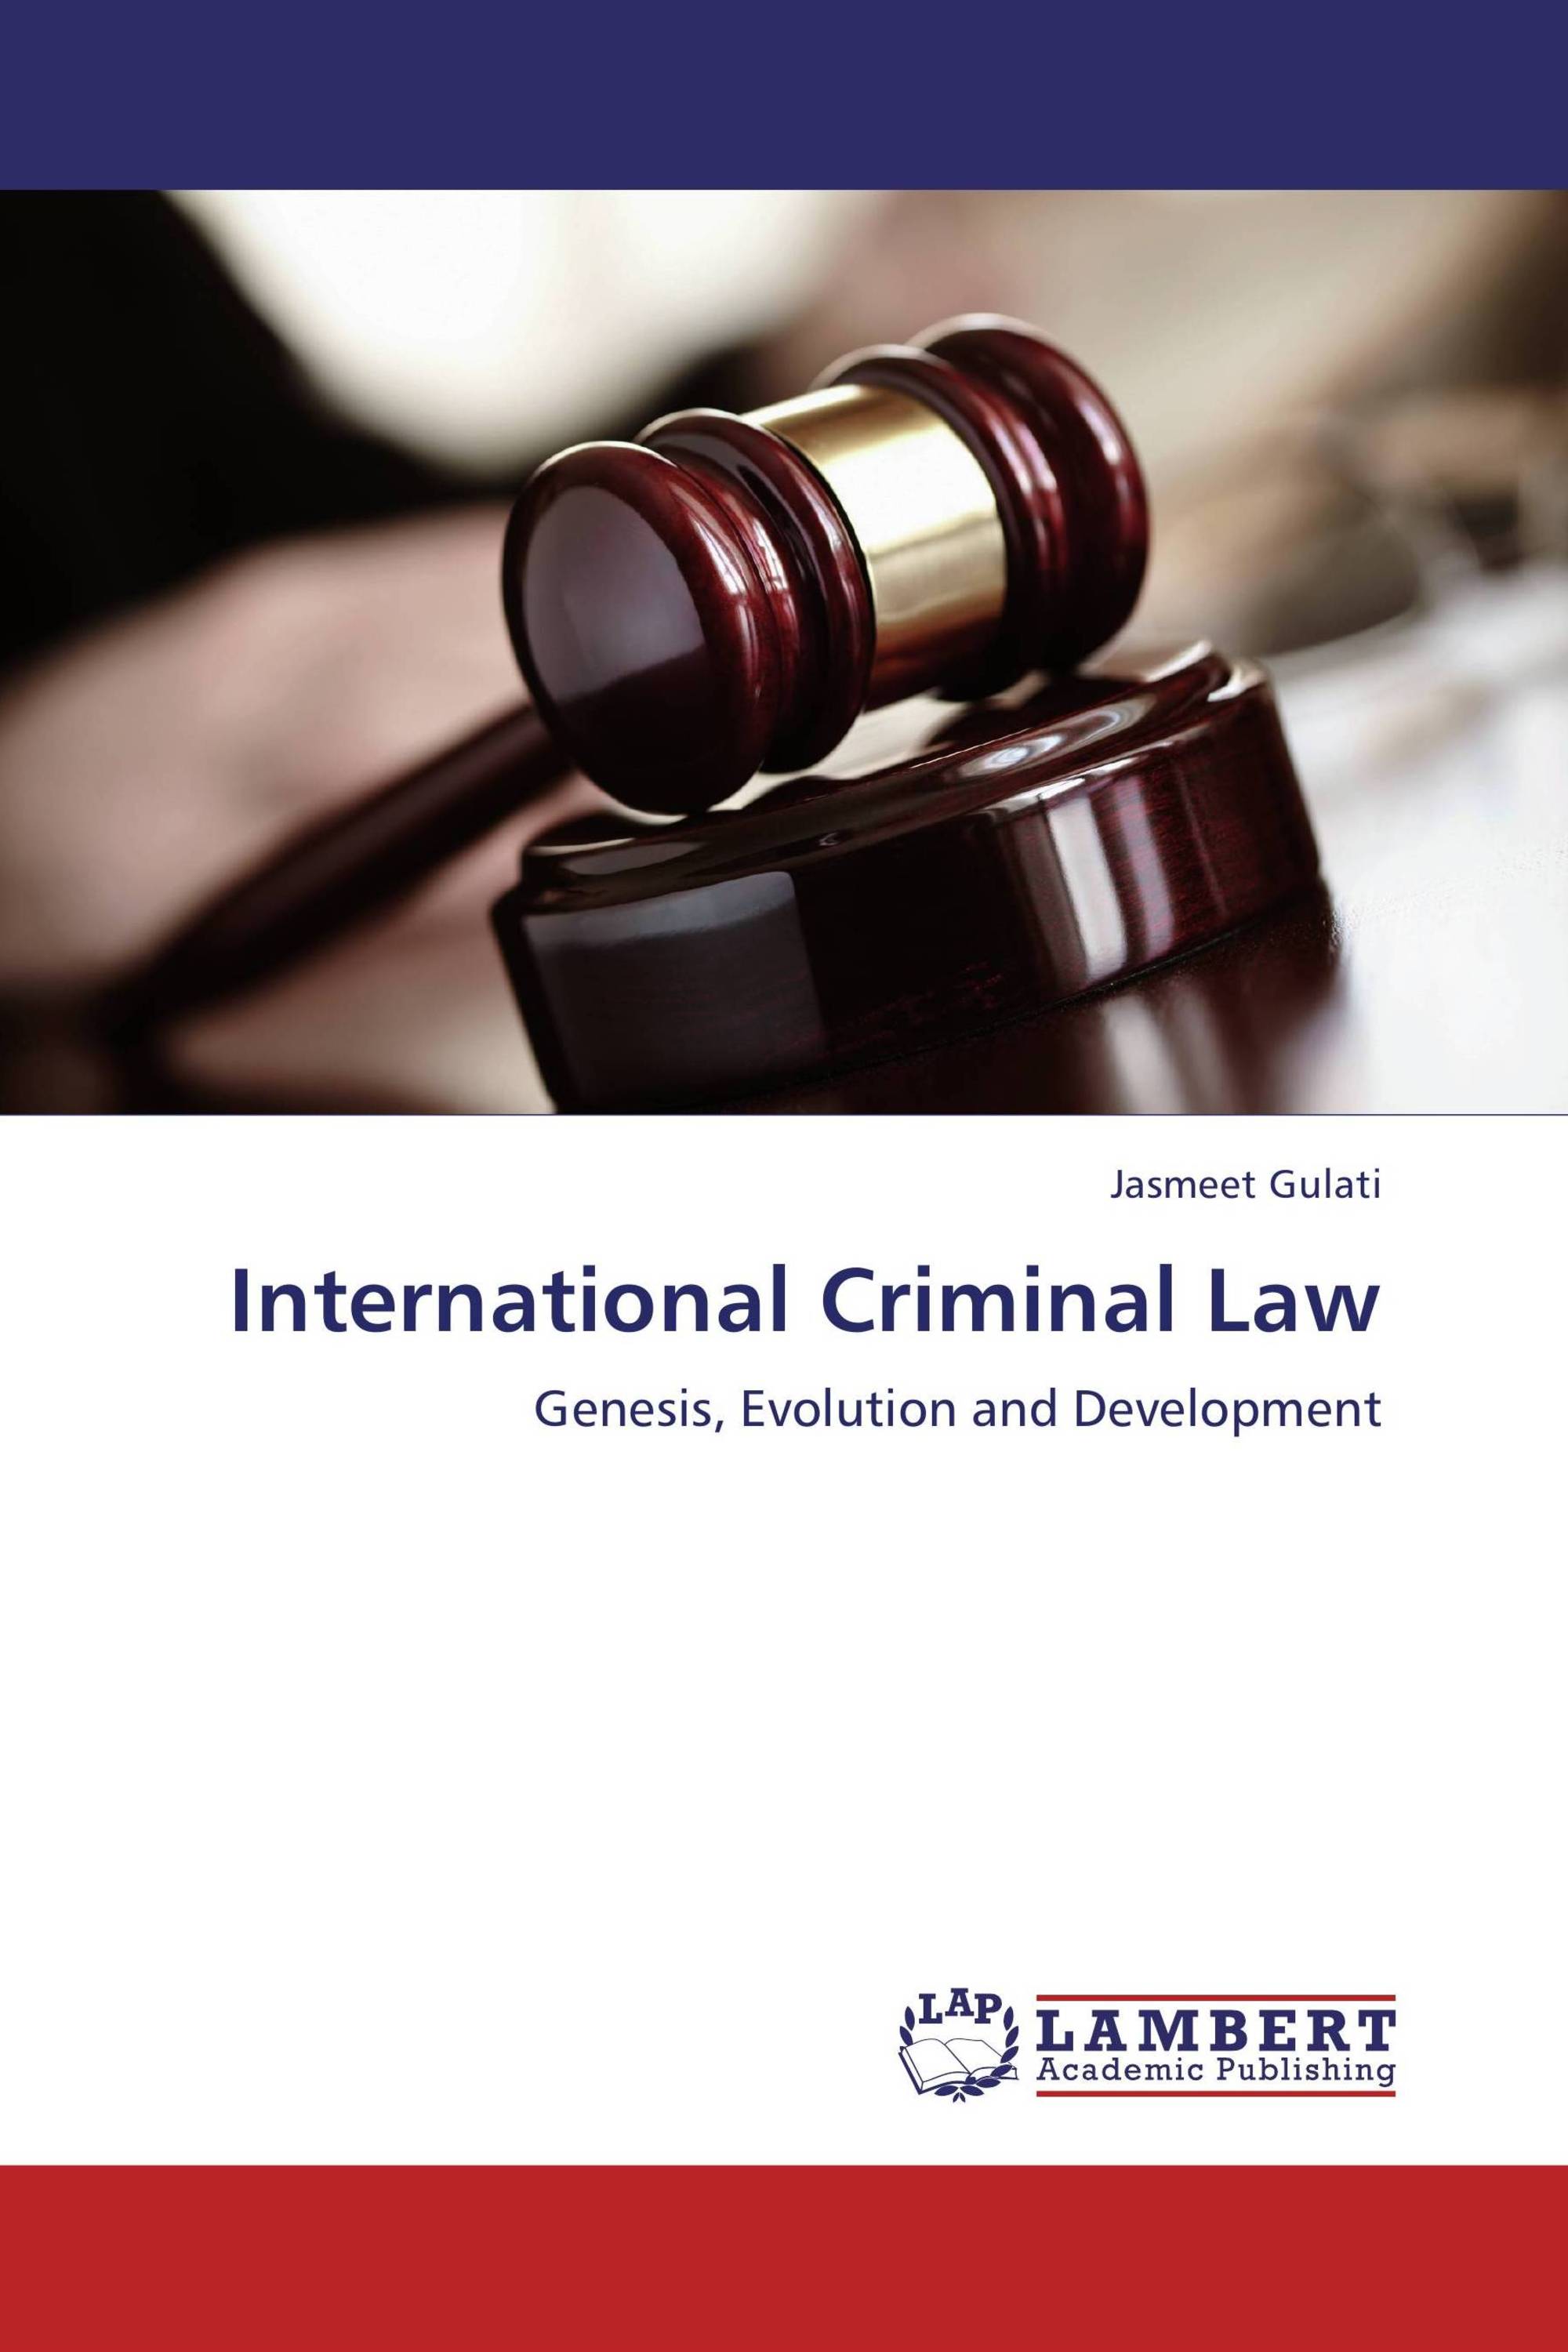 phd in international criminal law